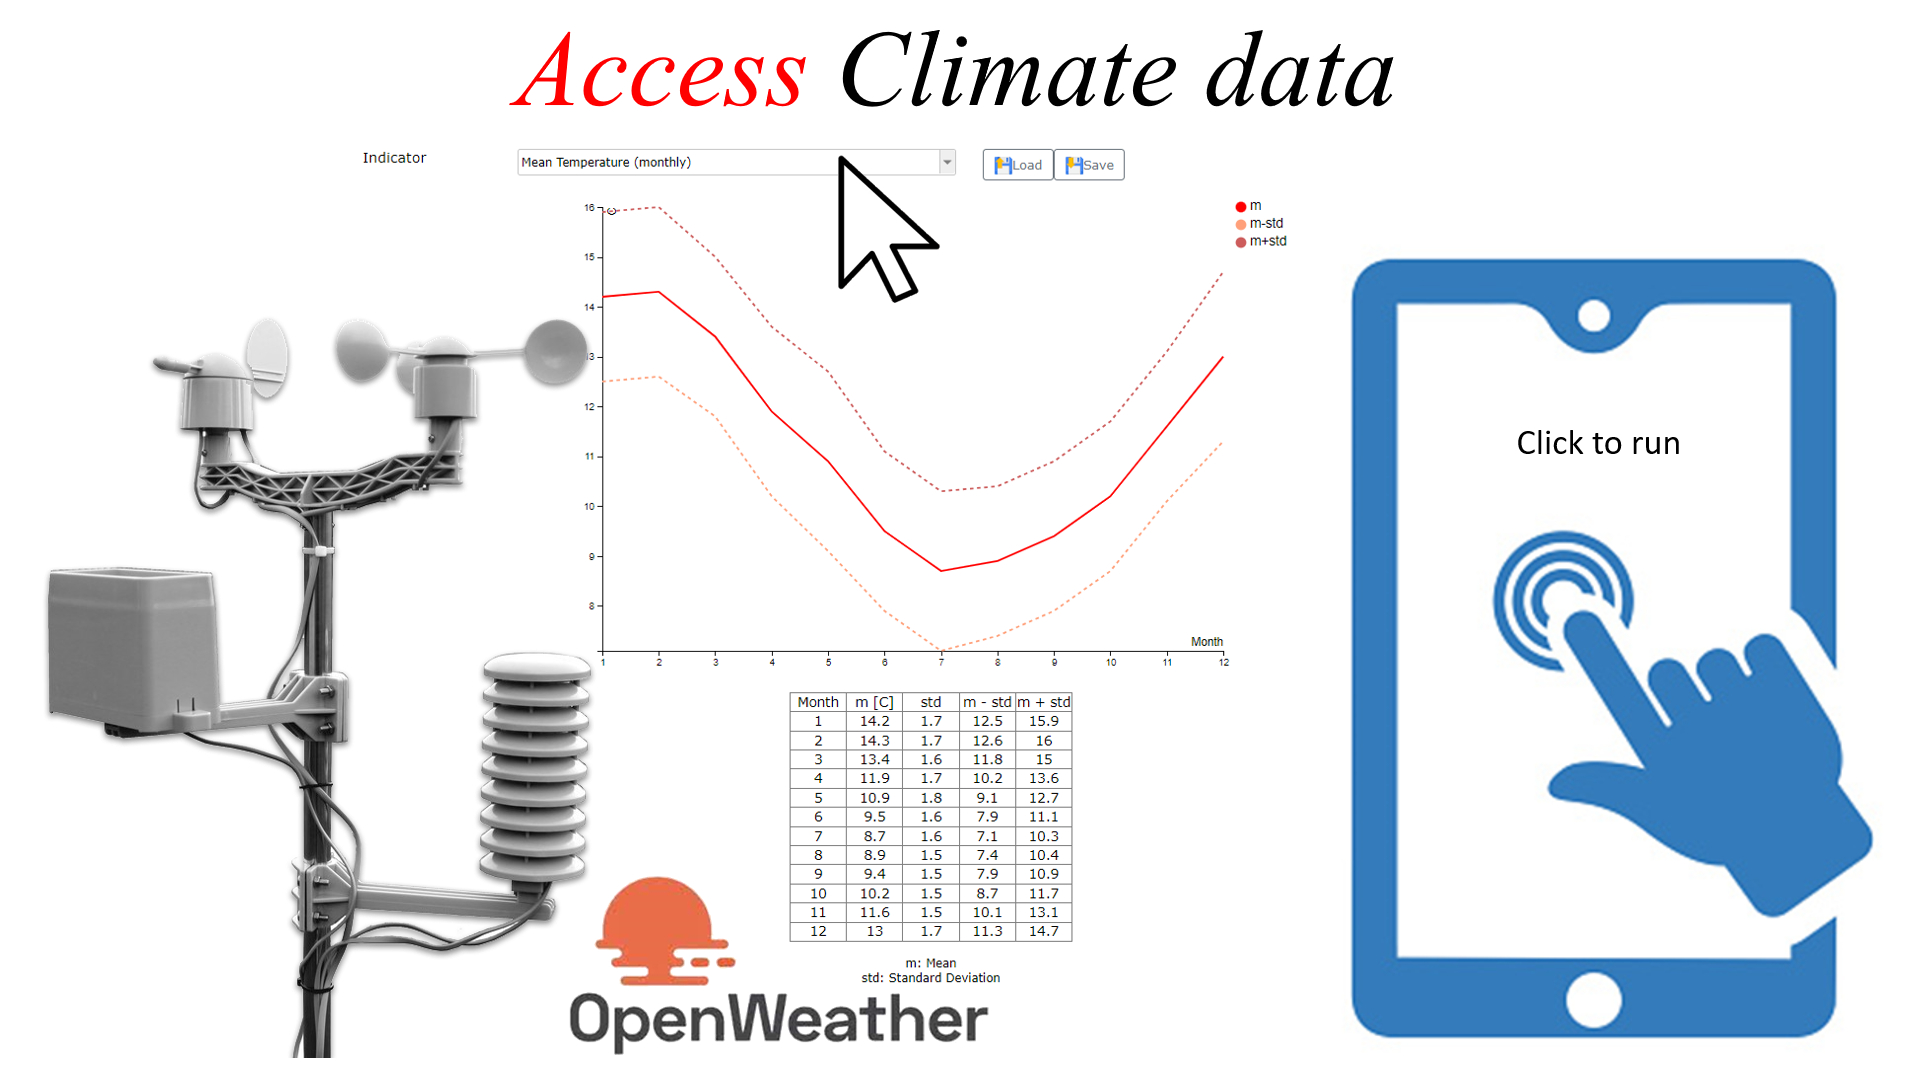 Key climate data